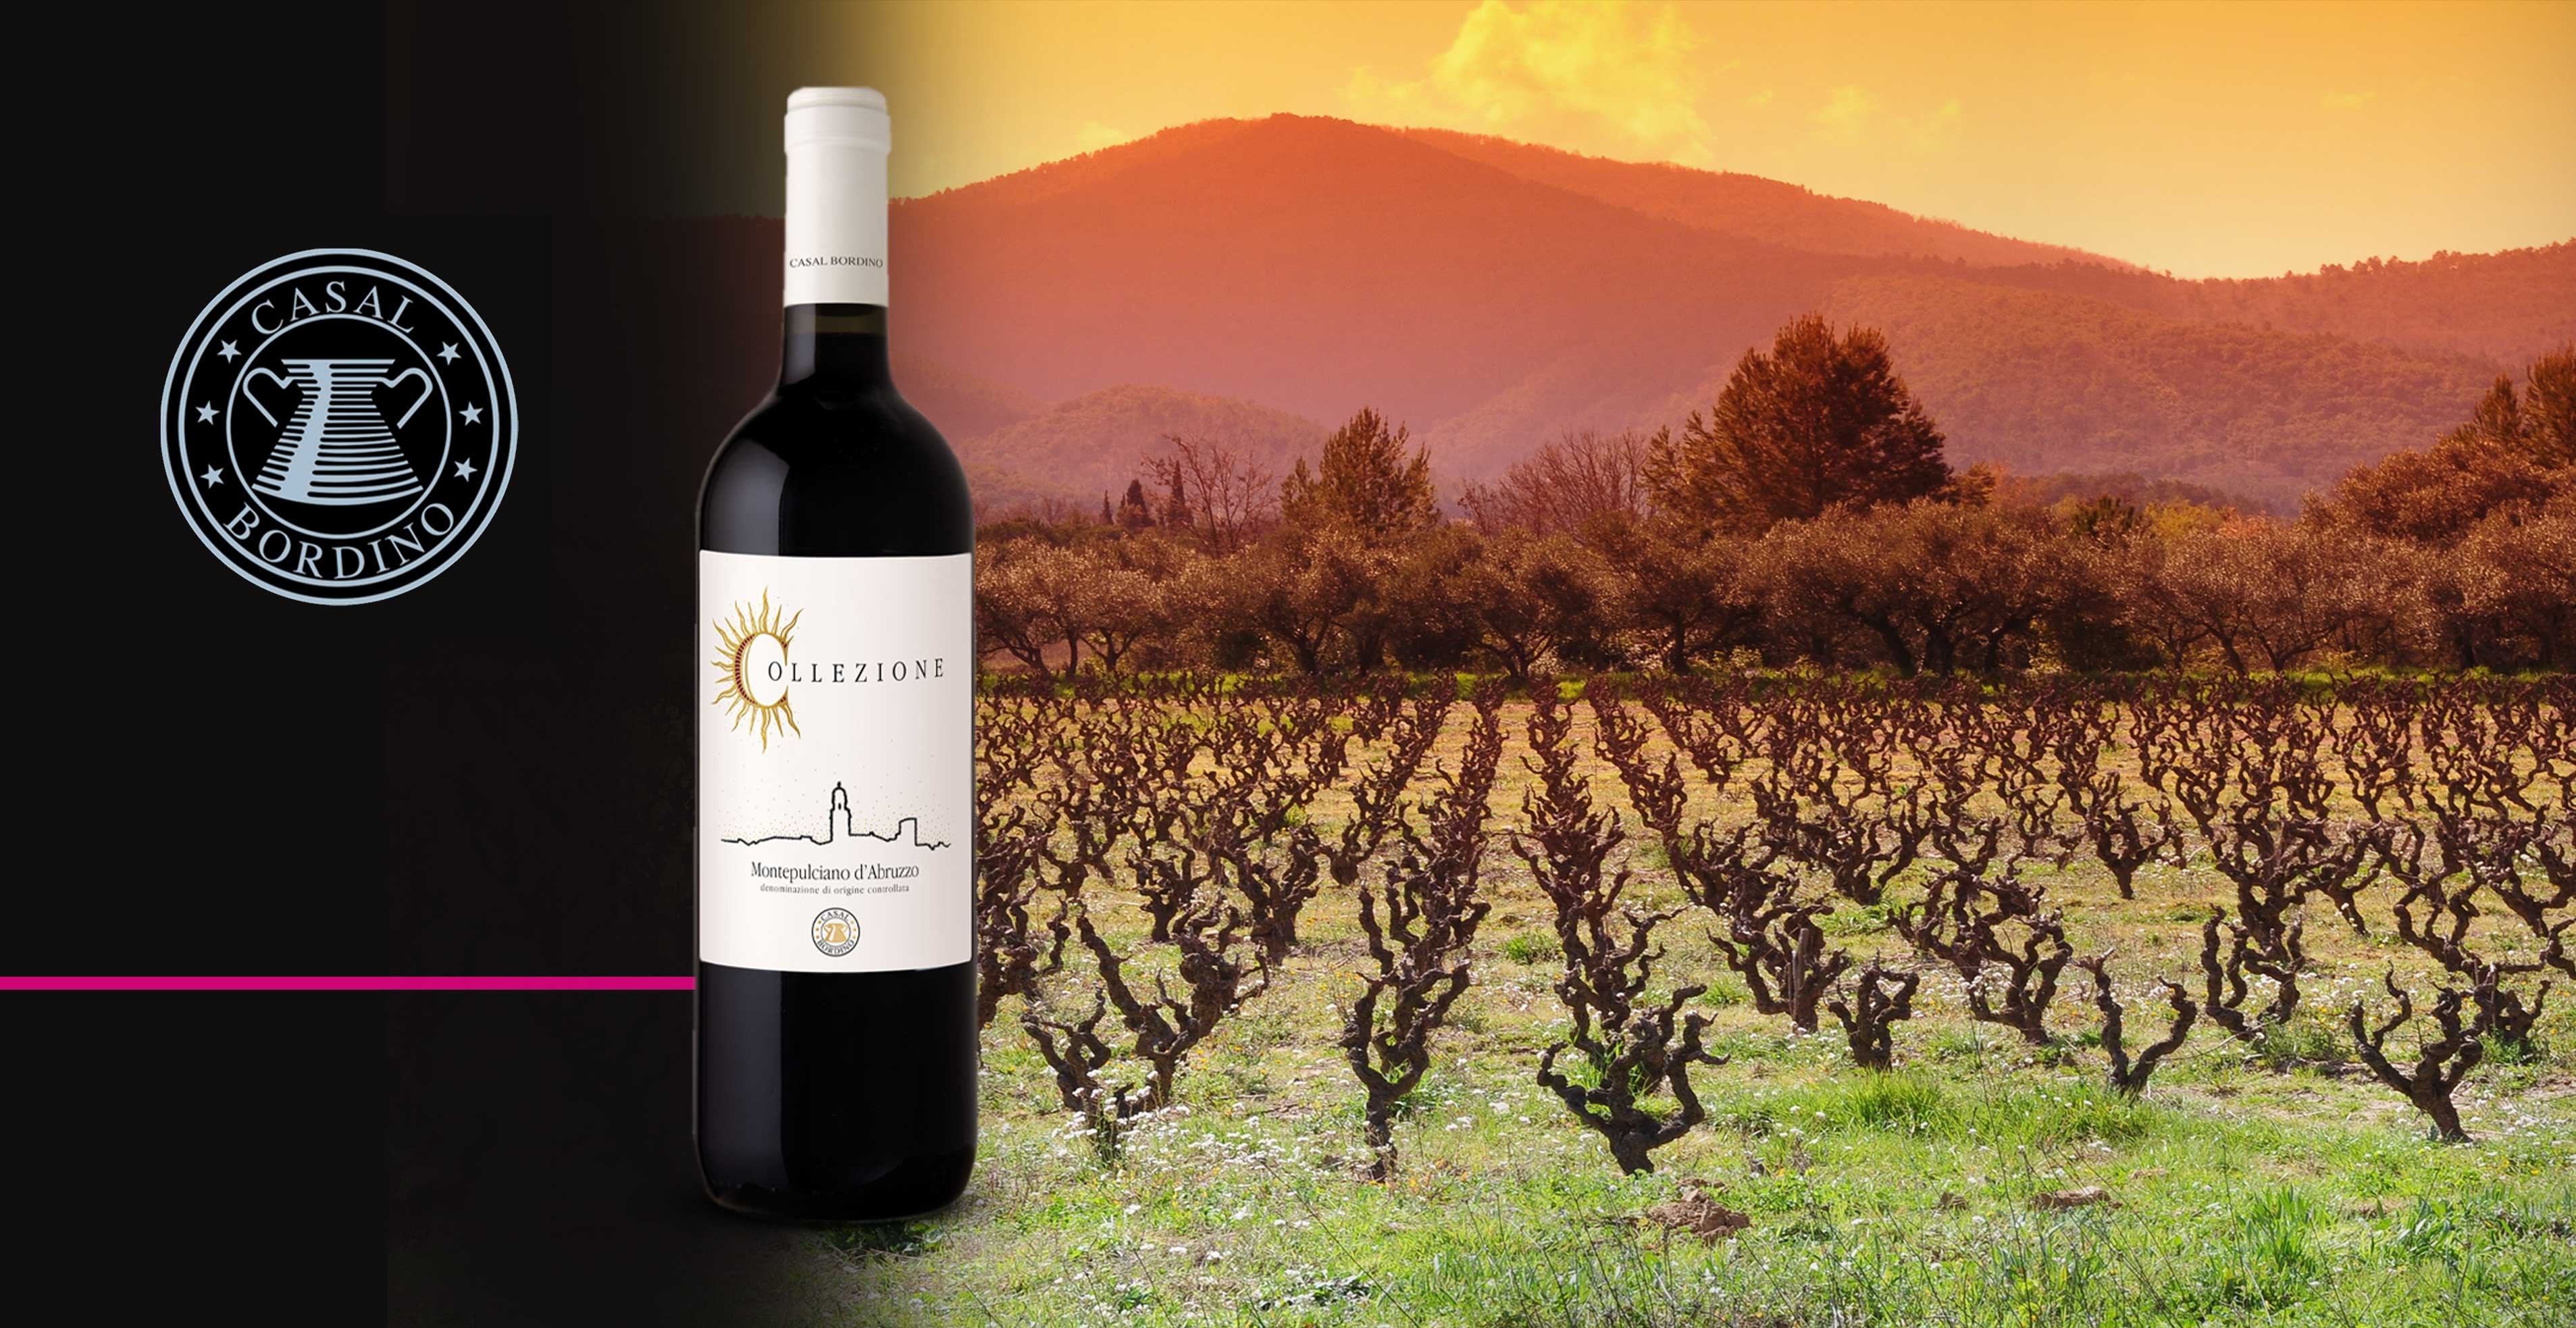 Rode wijn - CasalBordino - Montepulciano d'Abruzzo